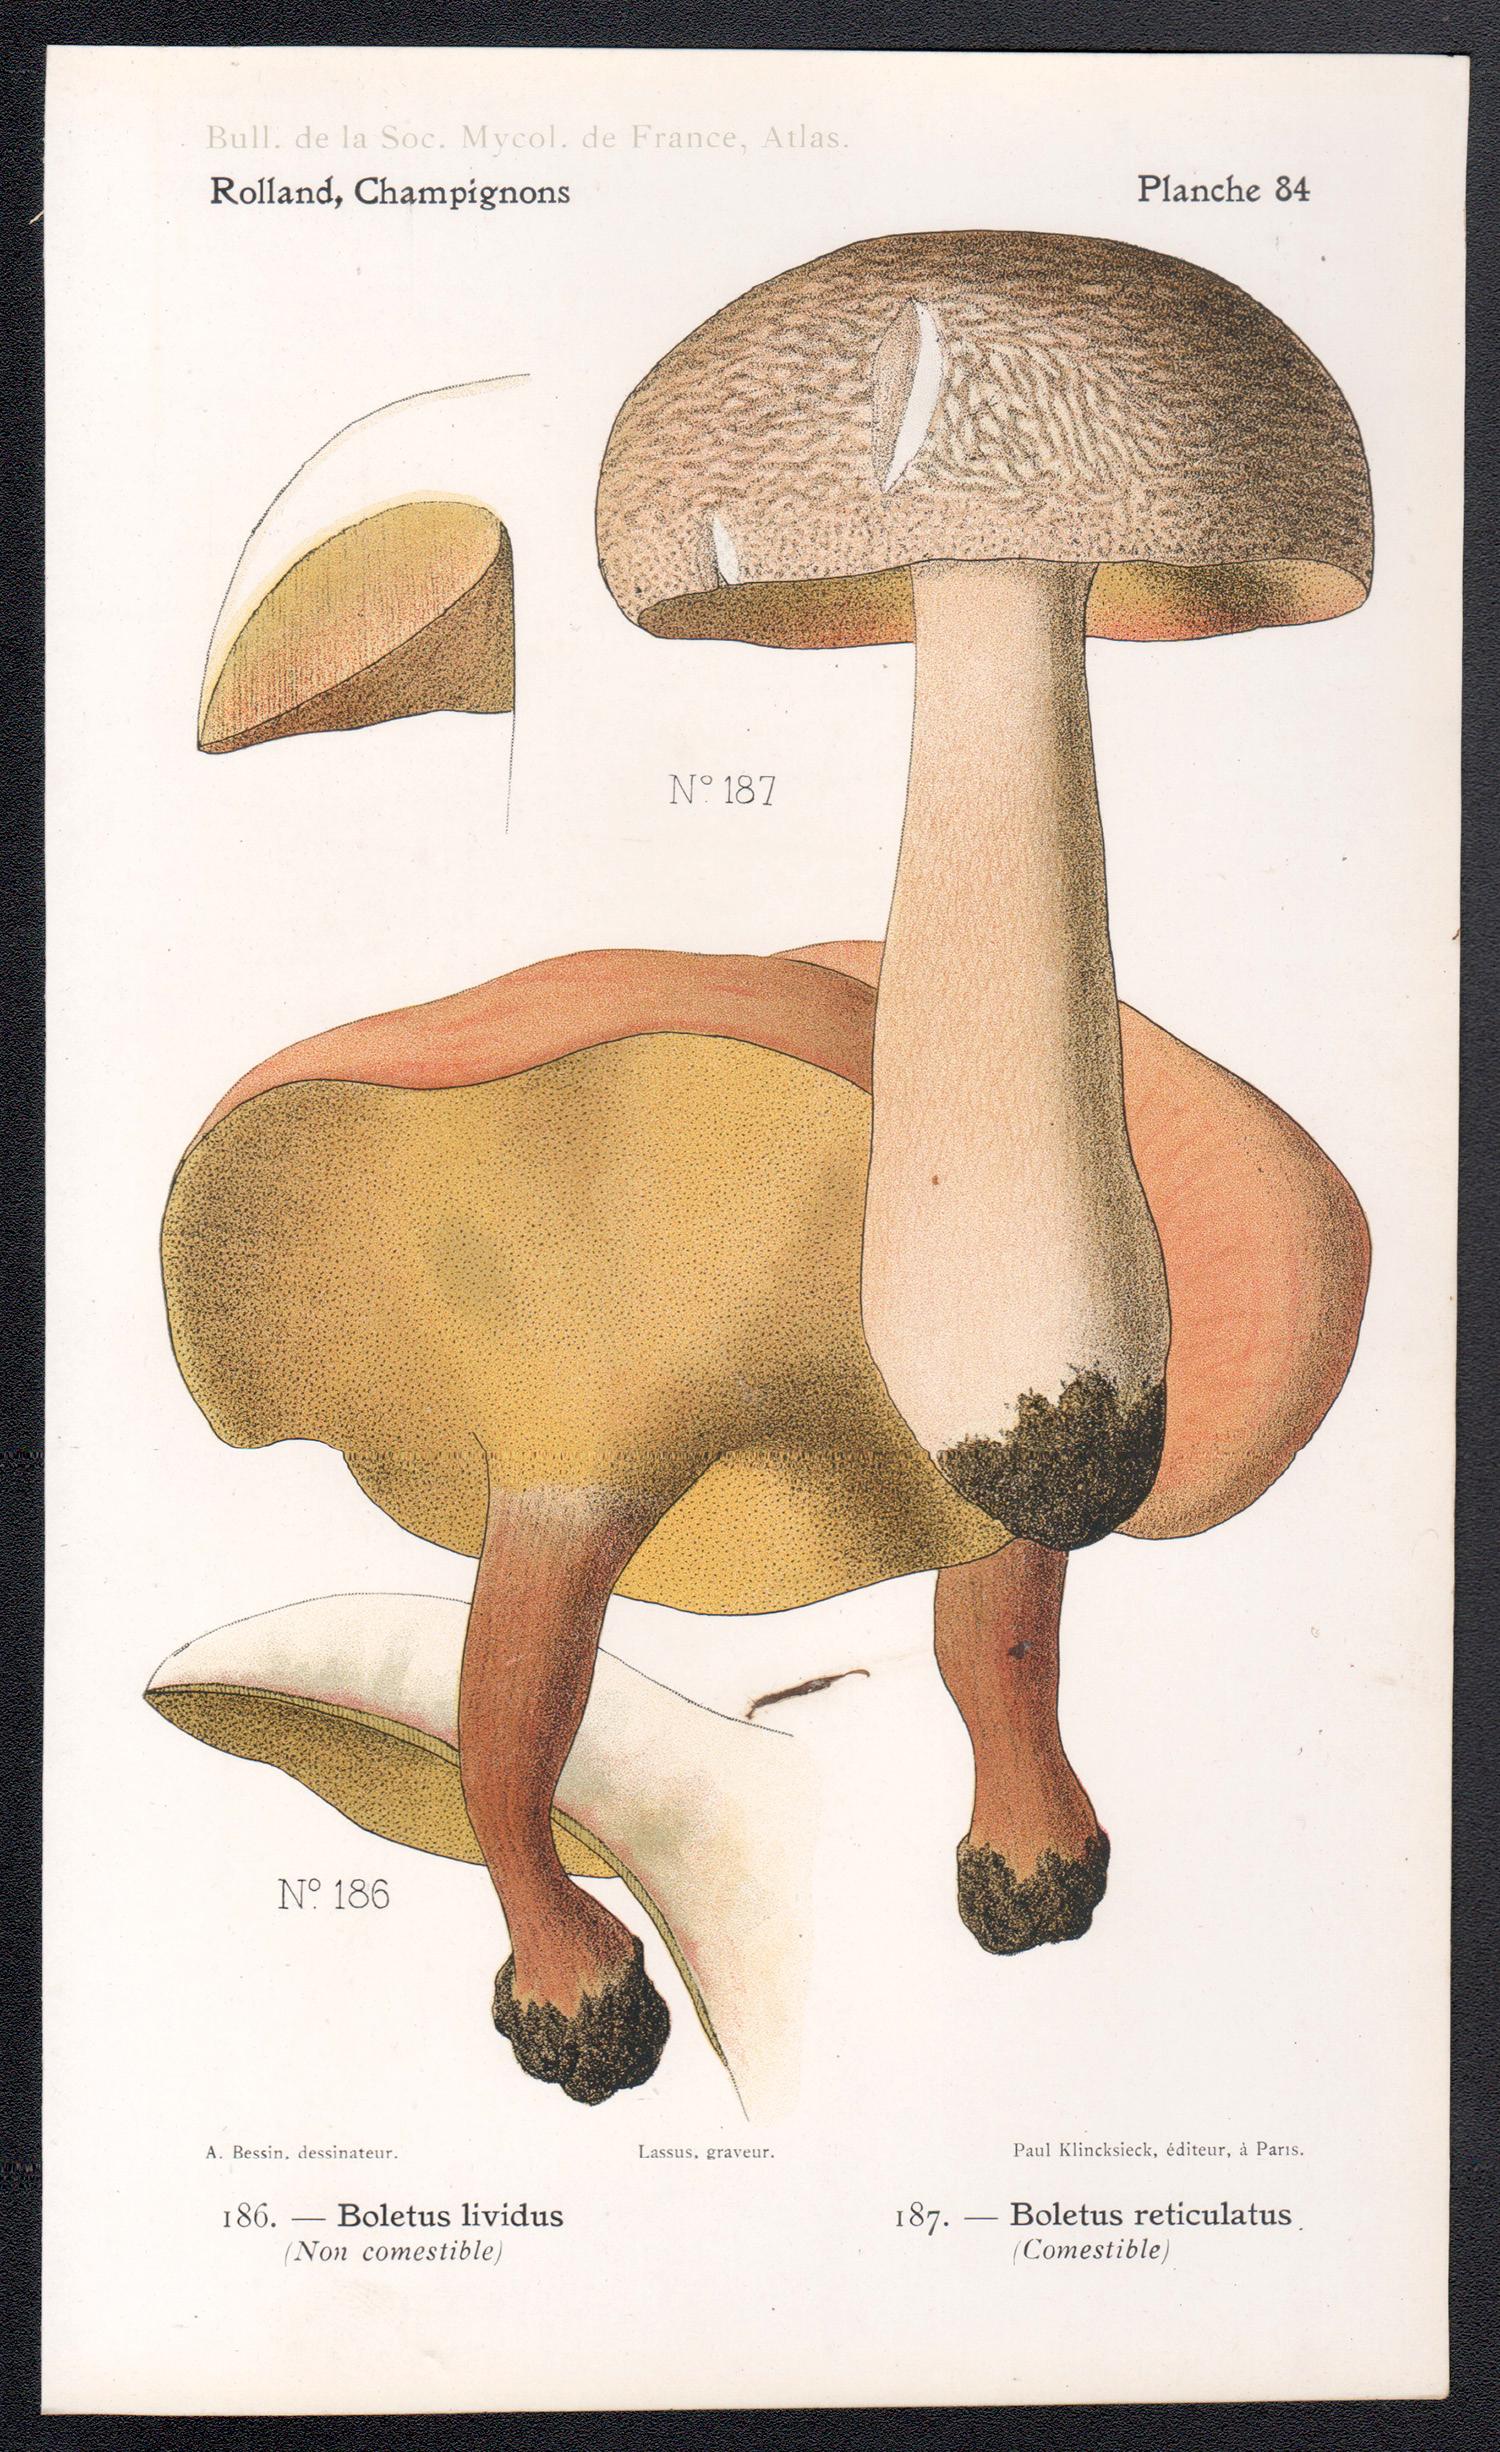 Champignons, Französische chromolithographie antiker Pilz fungi, 1910 – Print von Lassus after Aimé Bessin